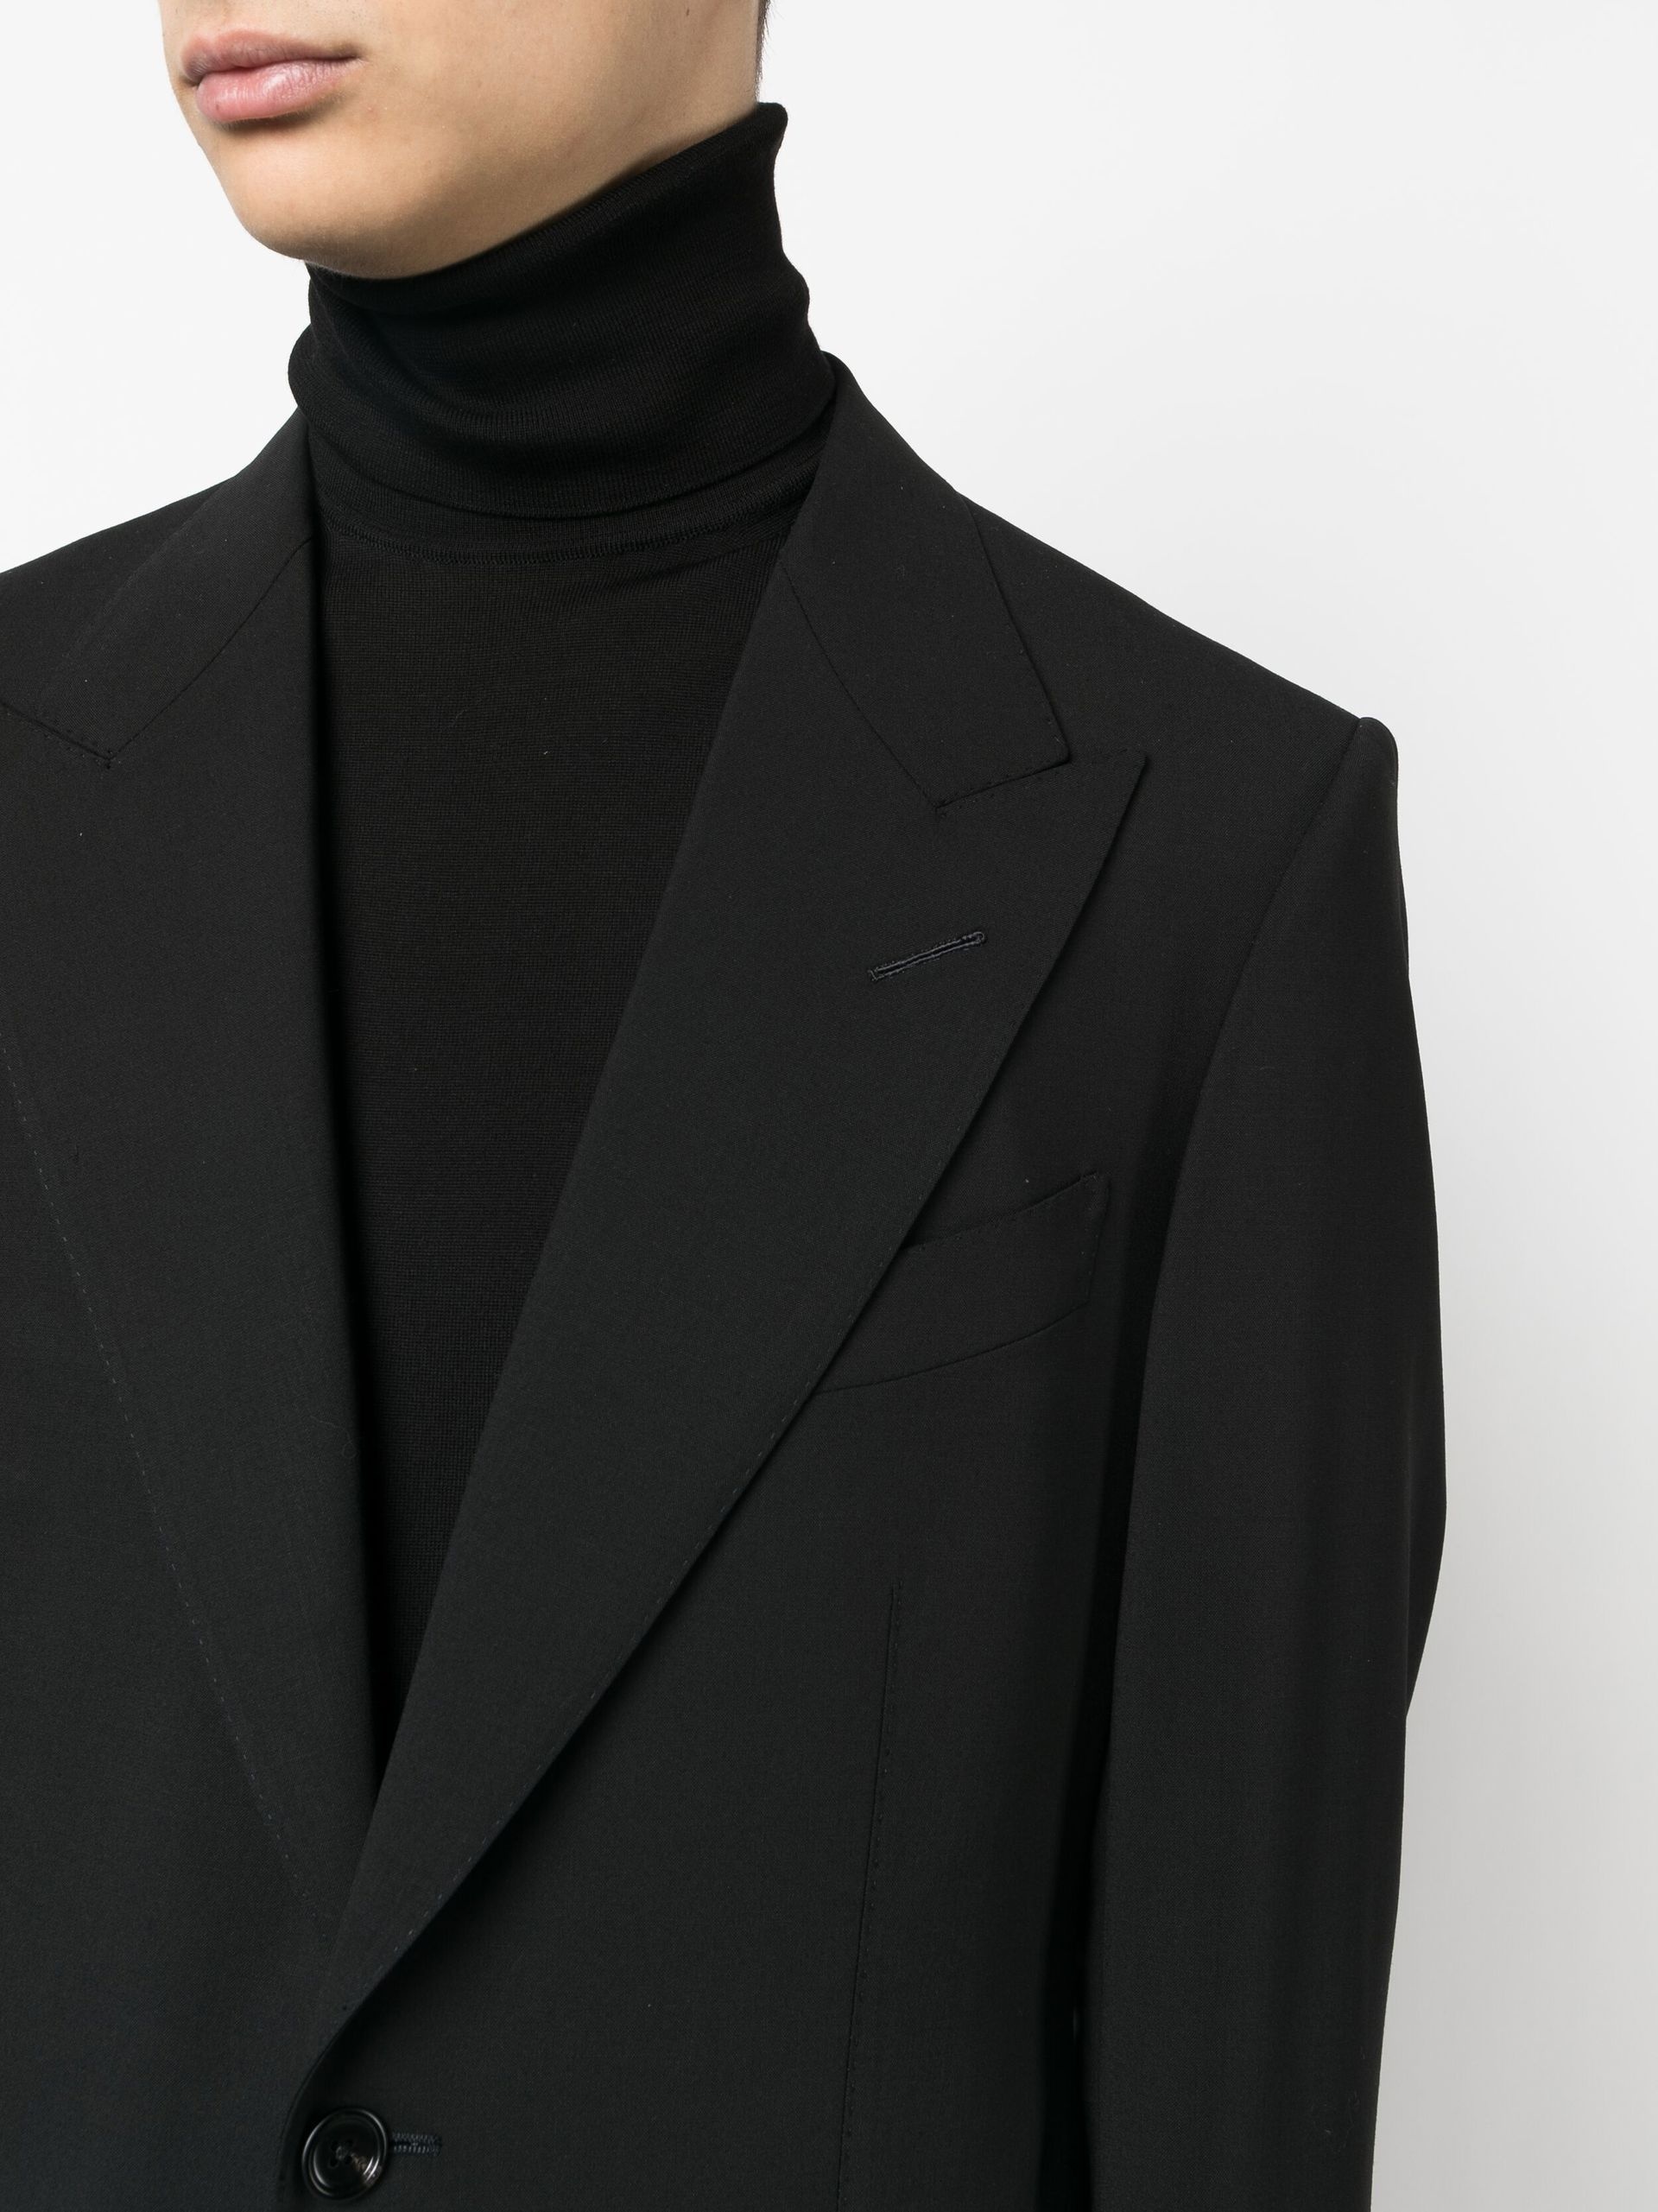 black Shelton single-breasted wool suit - 5